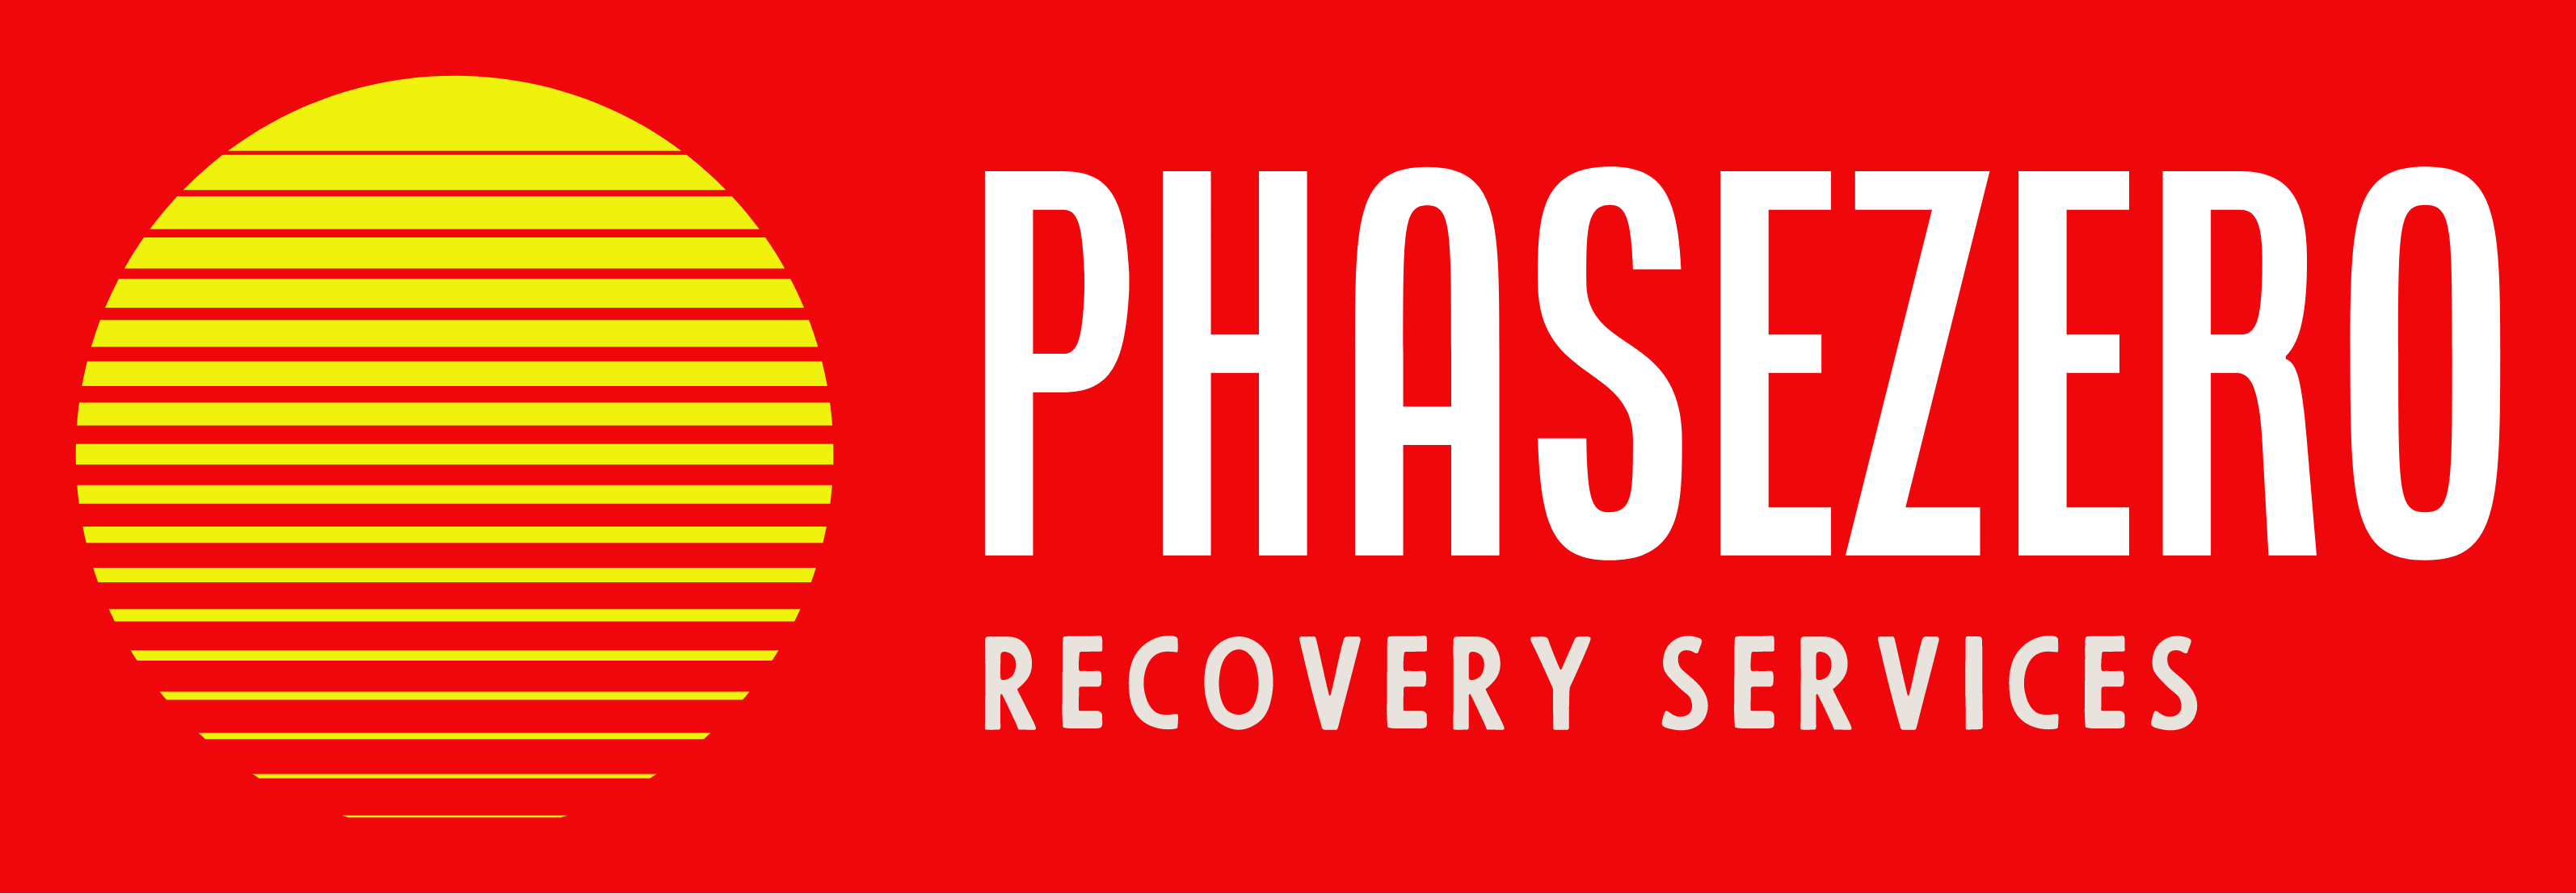 PhaseZero-Recovery-Minnesota-Addiction-Therapy-LOGO.jpg